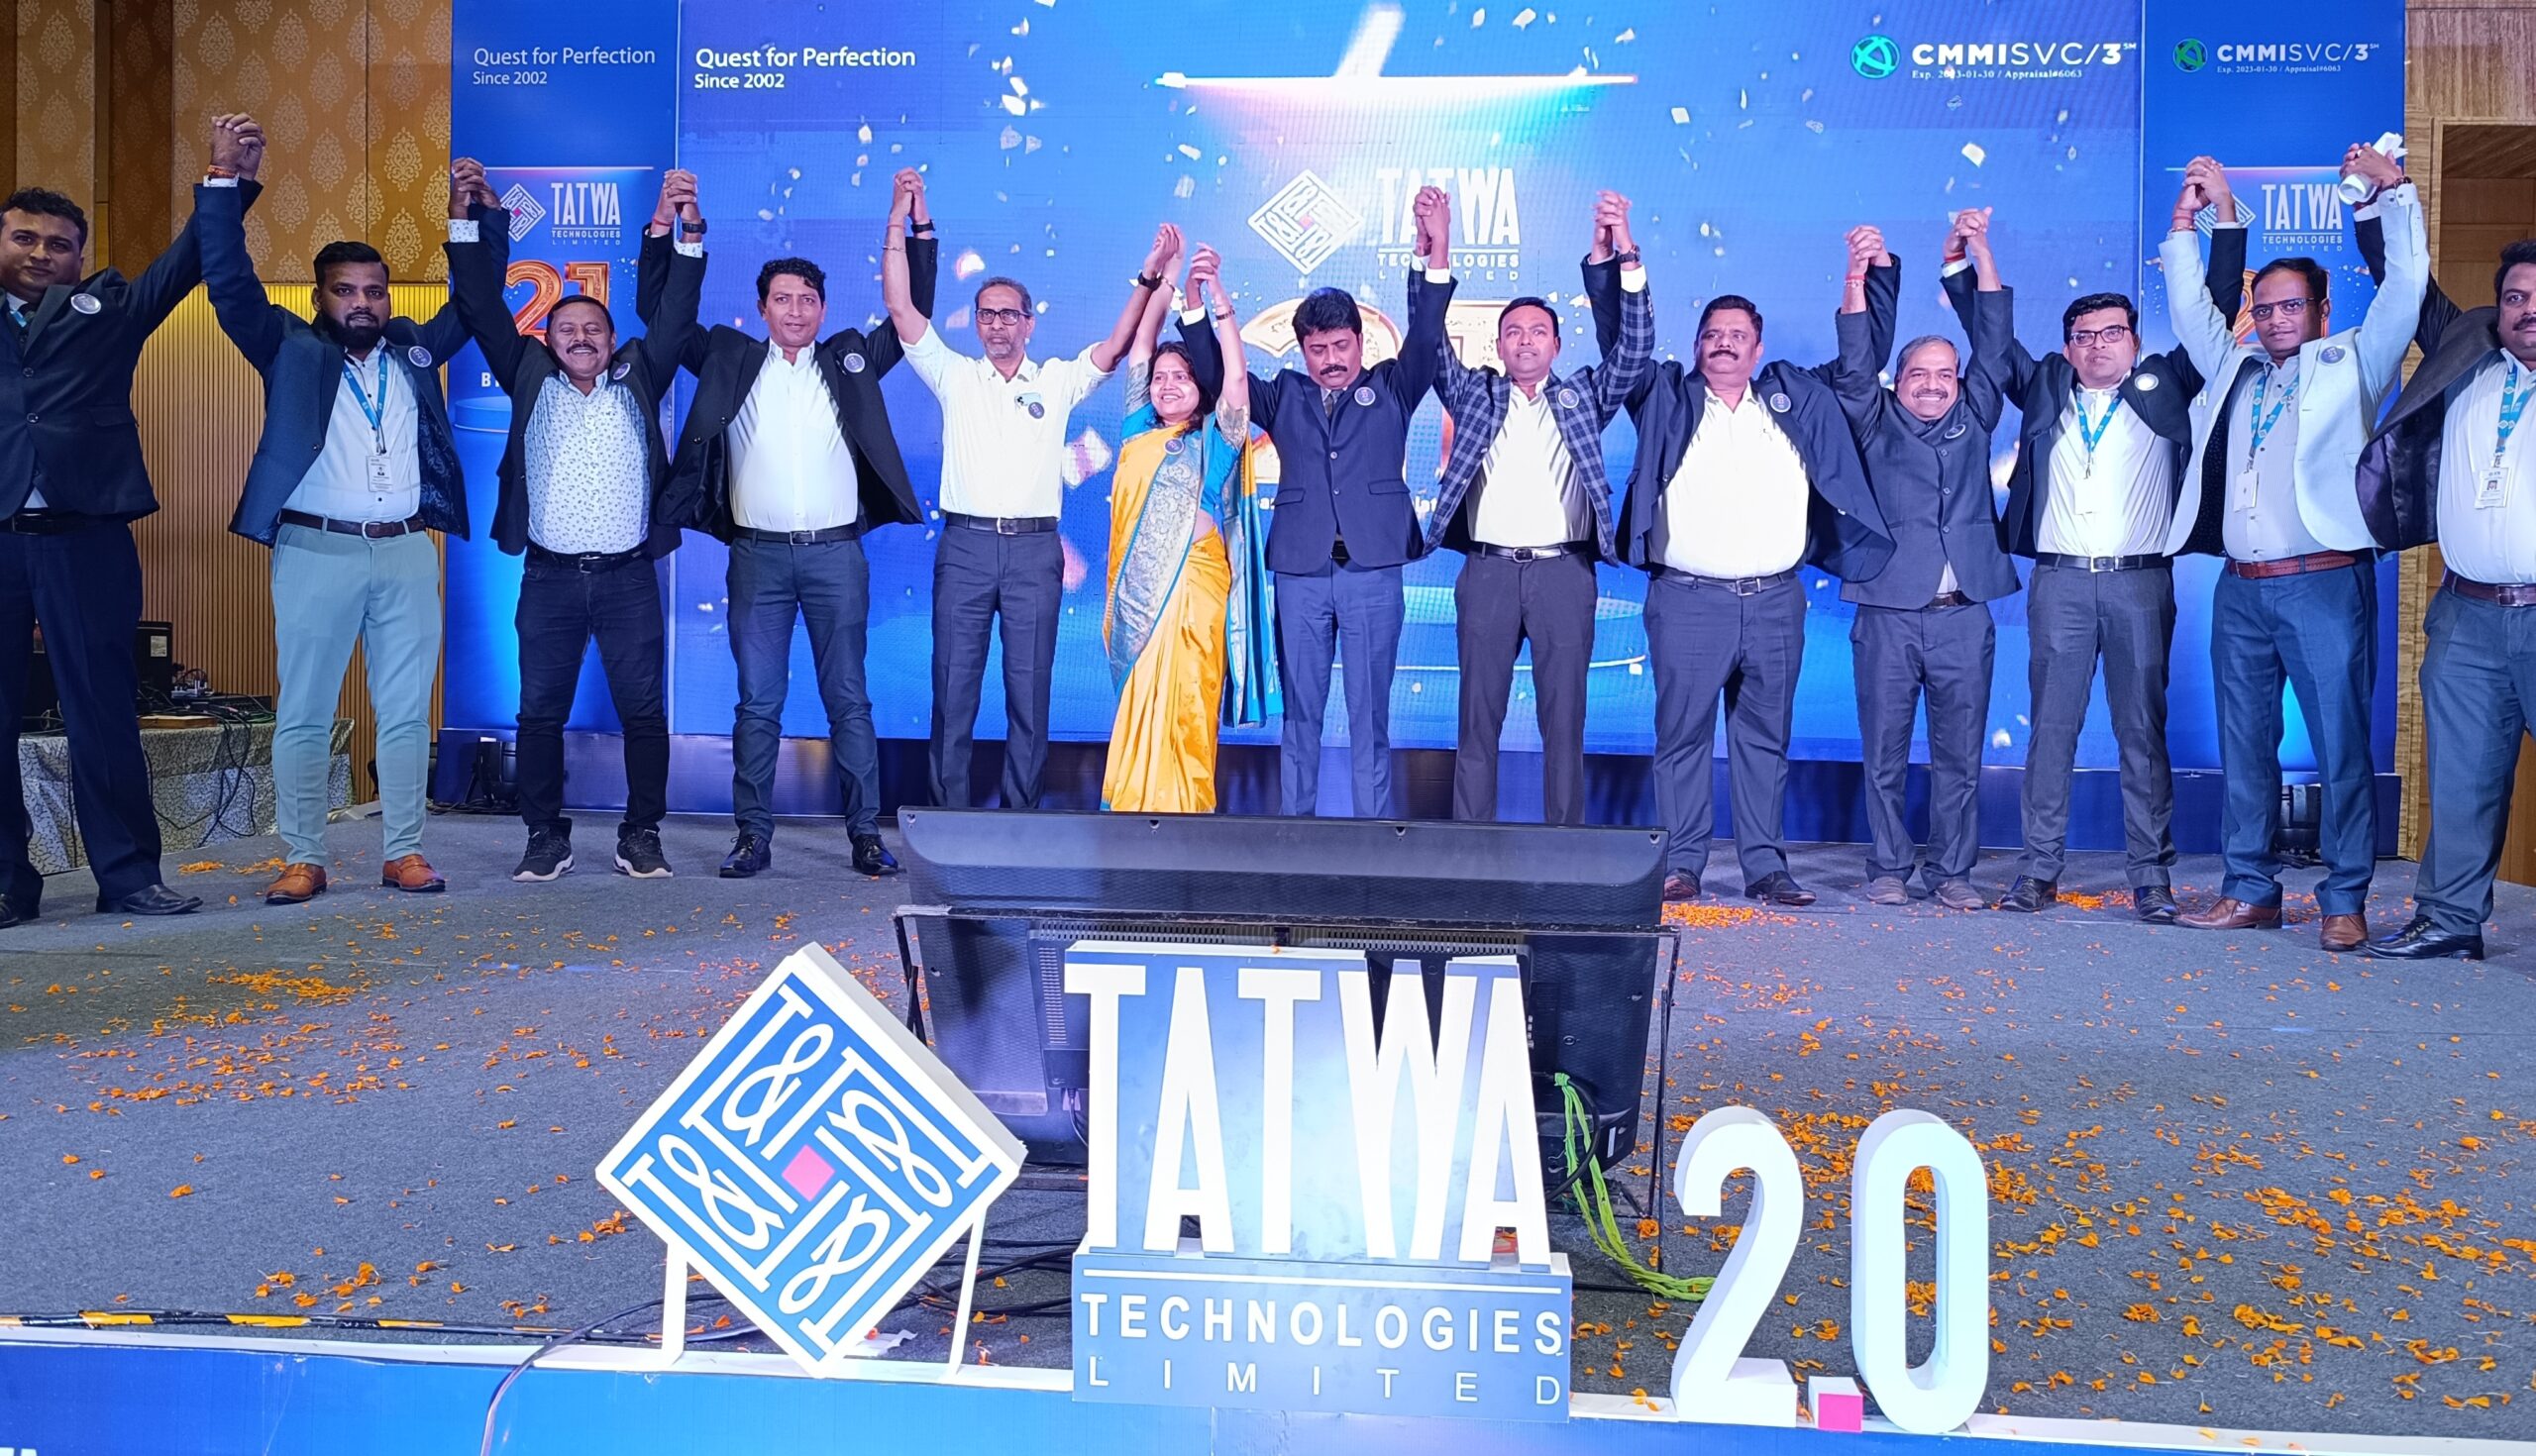 Tatwa Technologies completes 21 years.